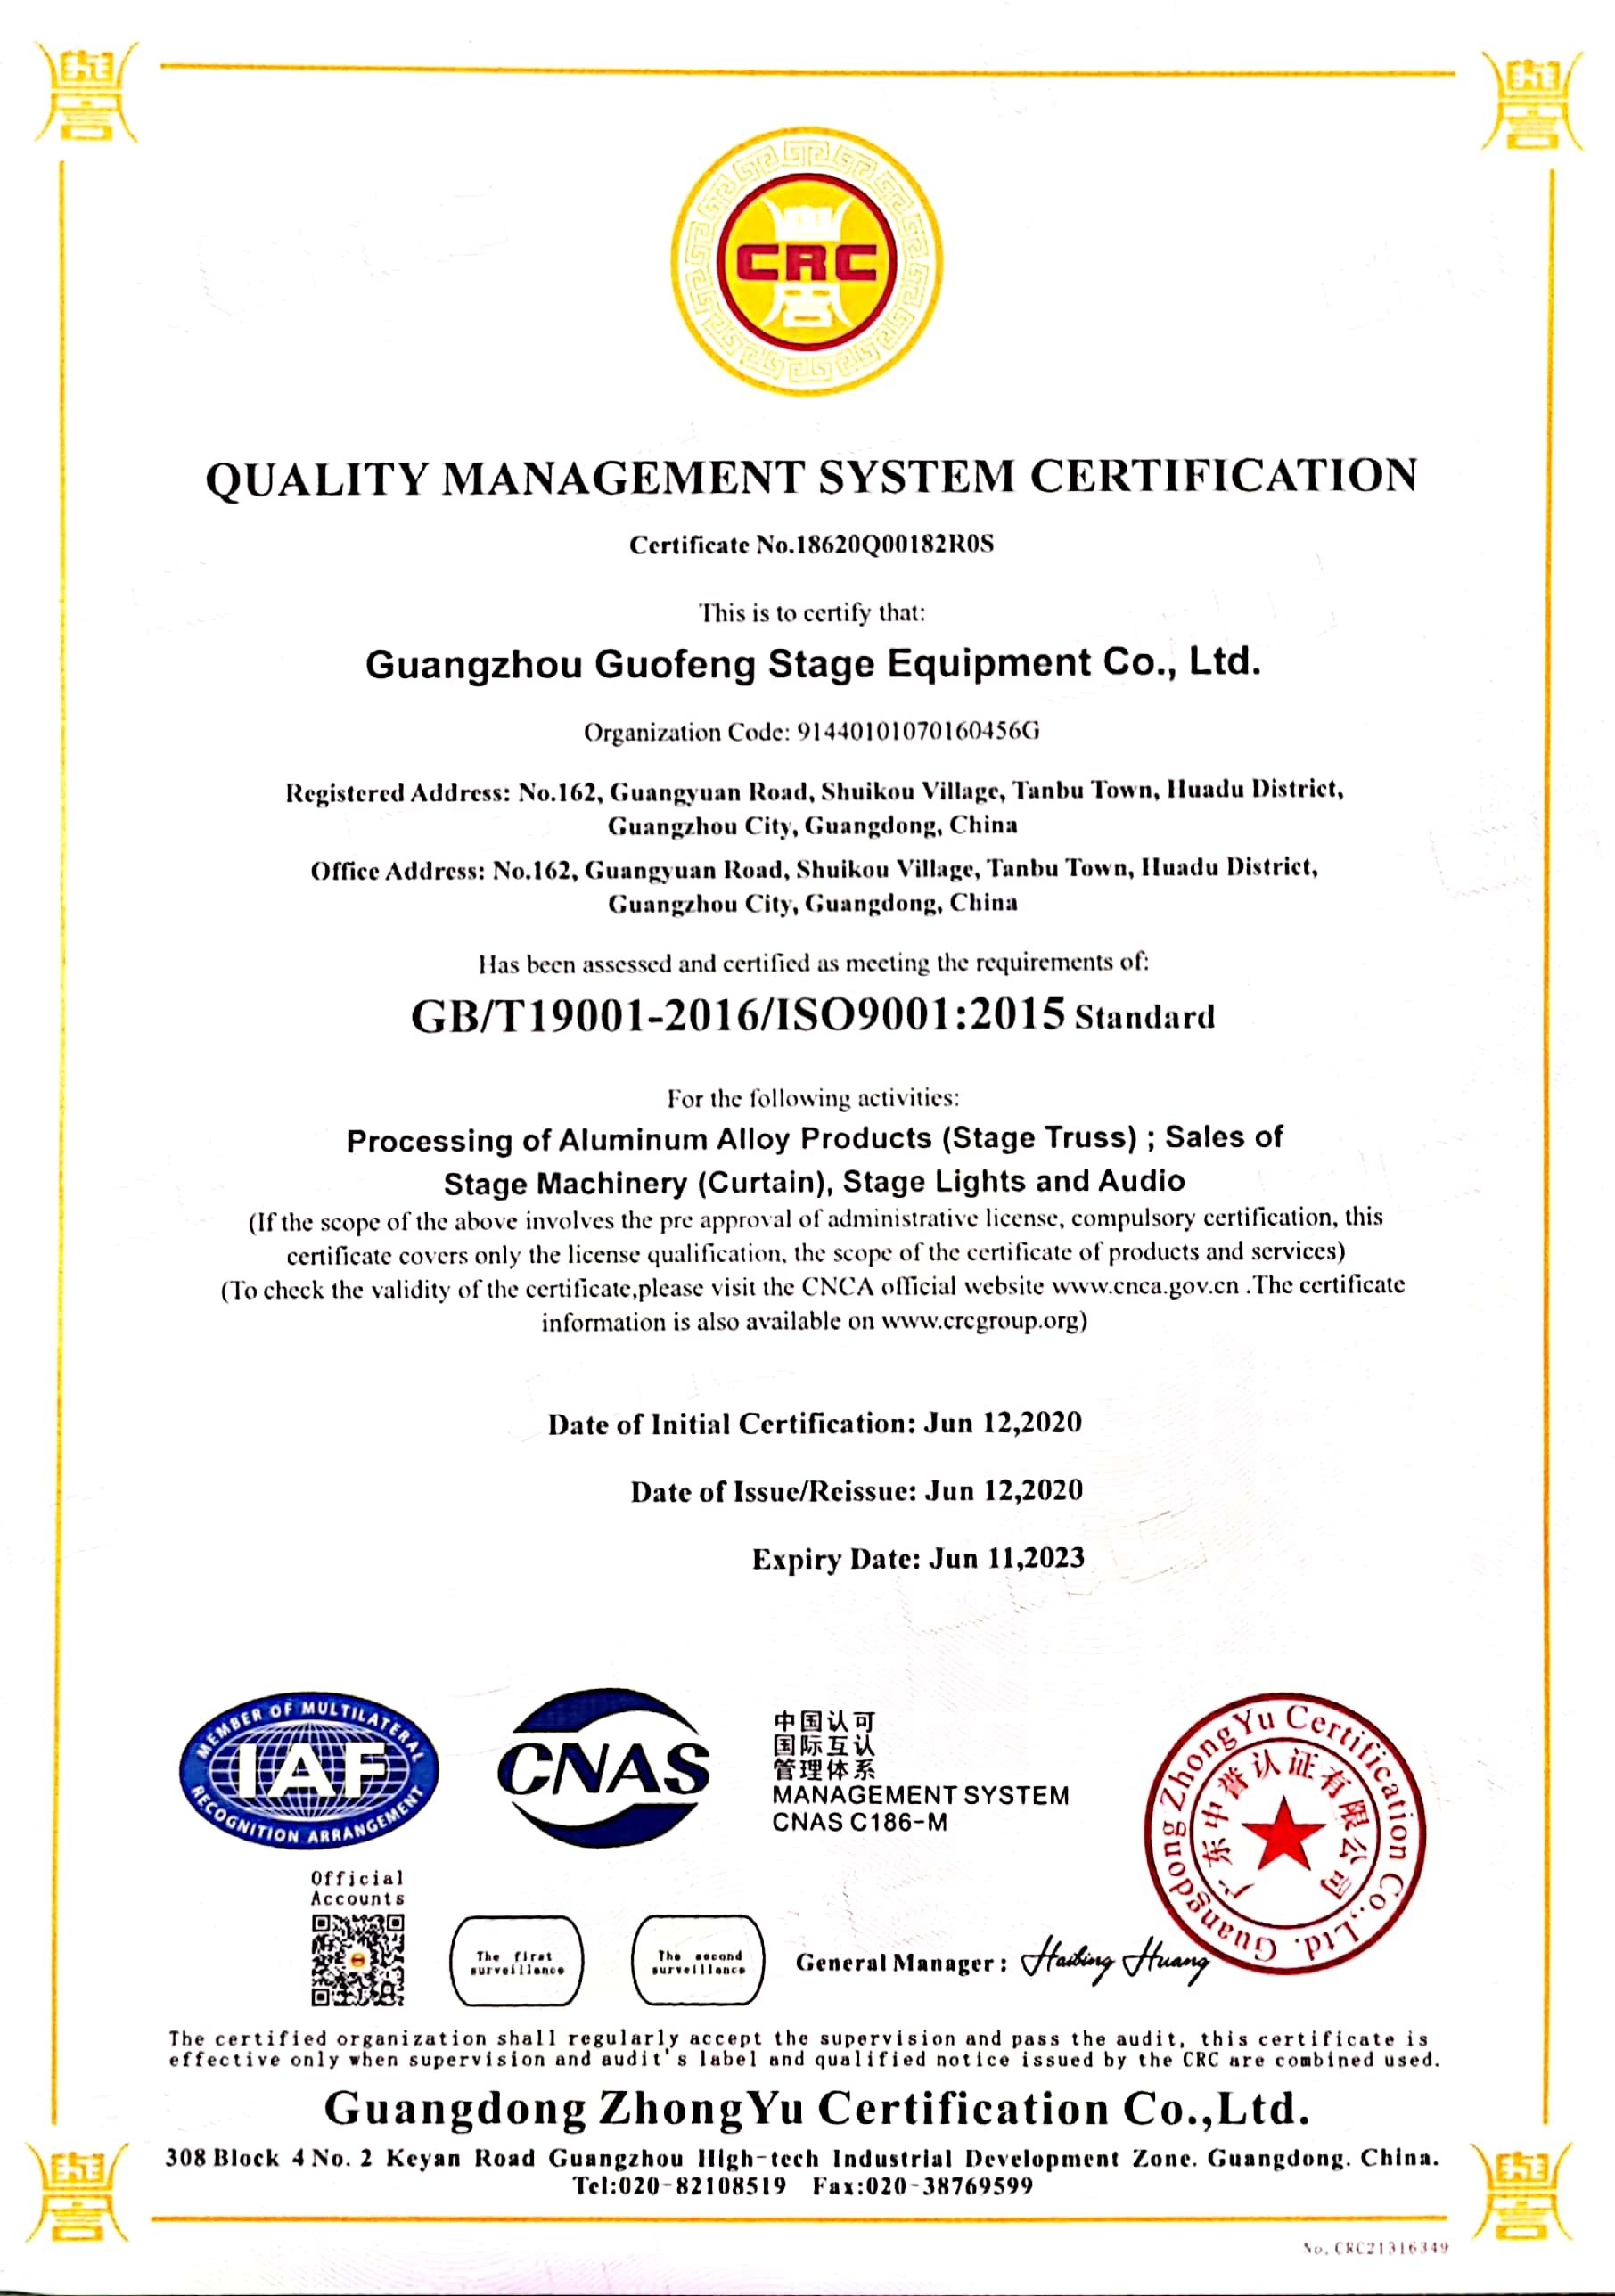 Guangzhou Guofeng Stage Equipment Co., Ltd. Certifications